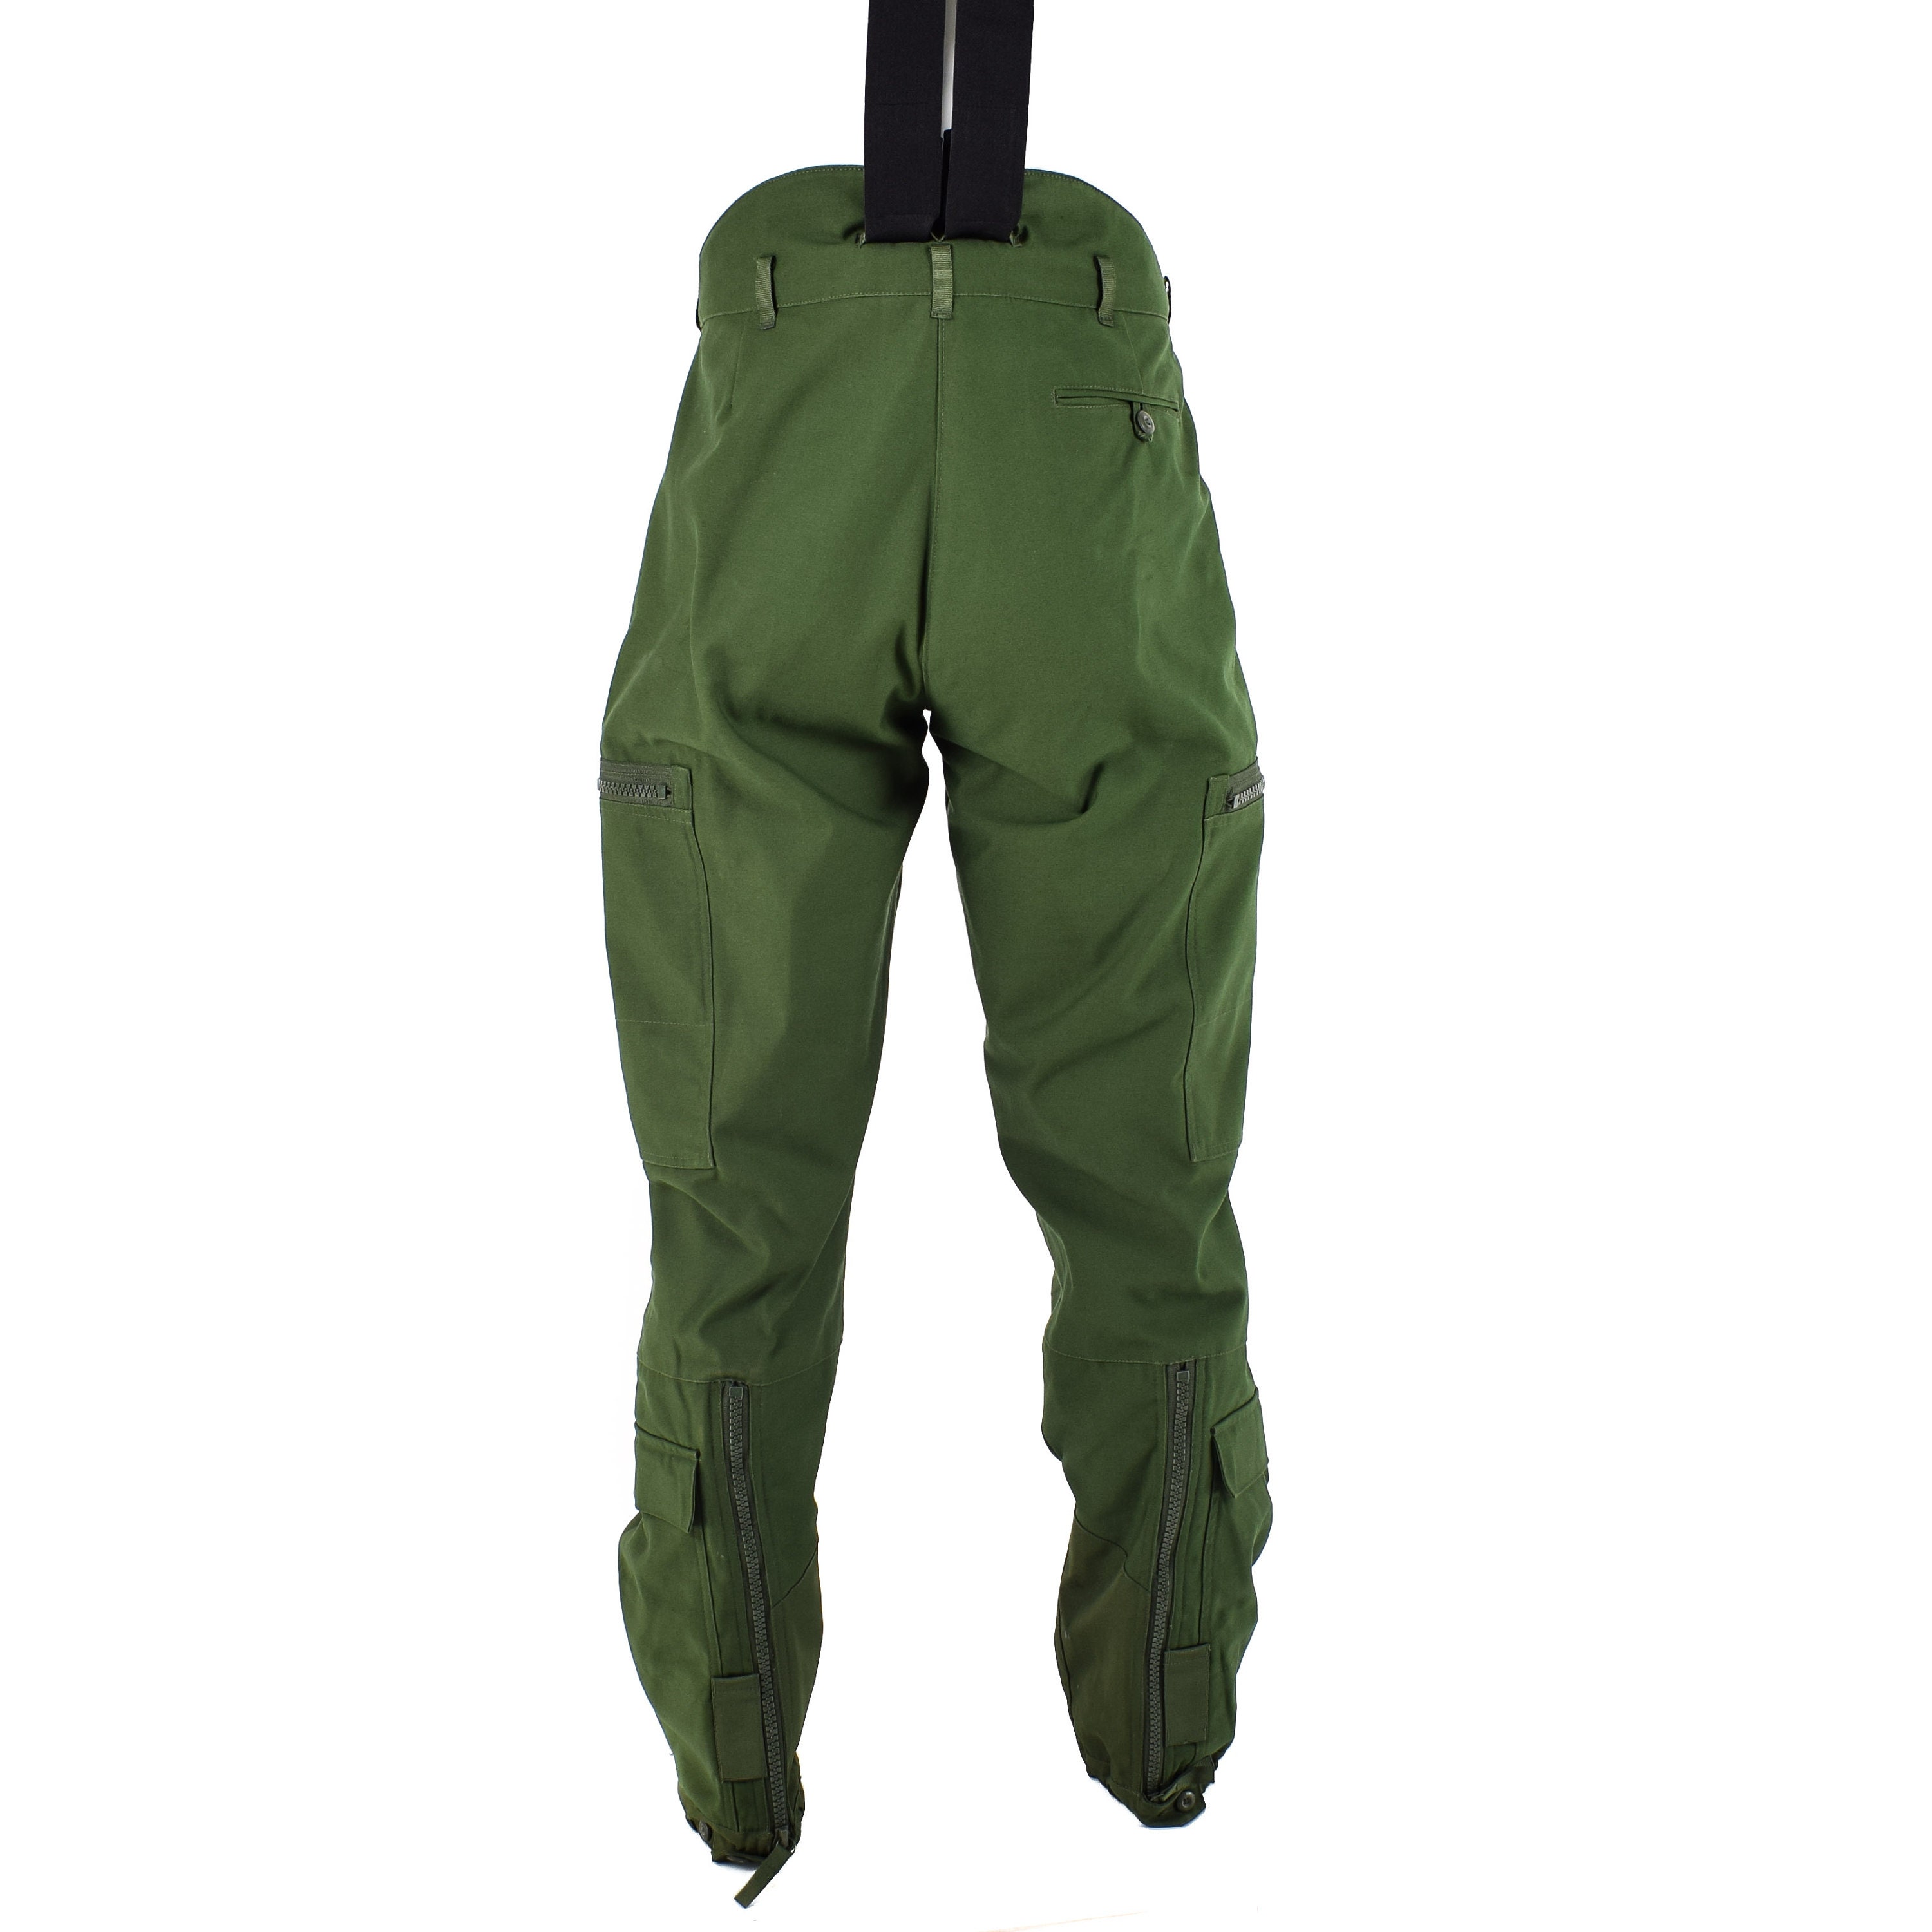 Genuine Swedish thermal tanker pants m90 Olive BDU trousers w braces